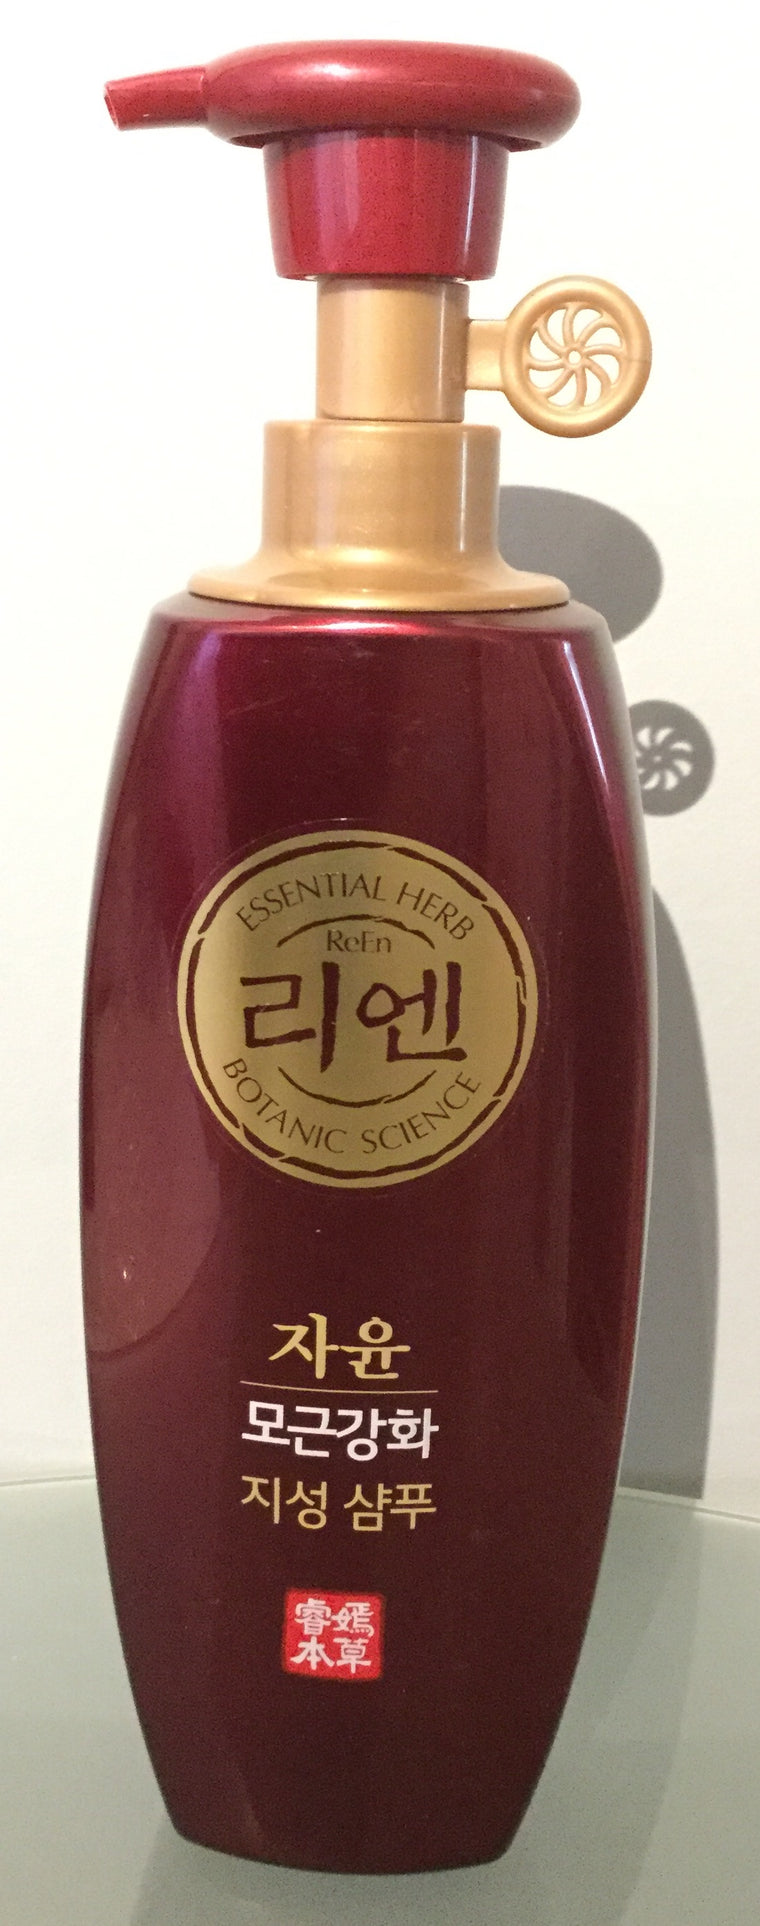 Essential Herb shampoo Normal to Dry Hair 16.9 oz